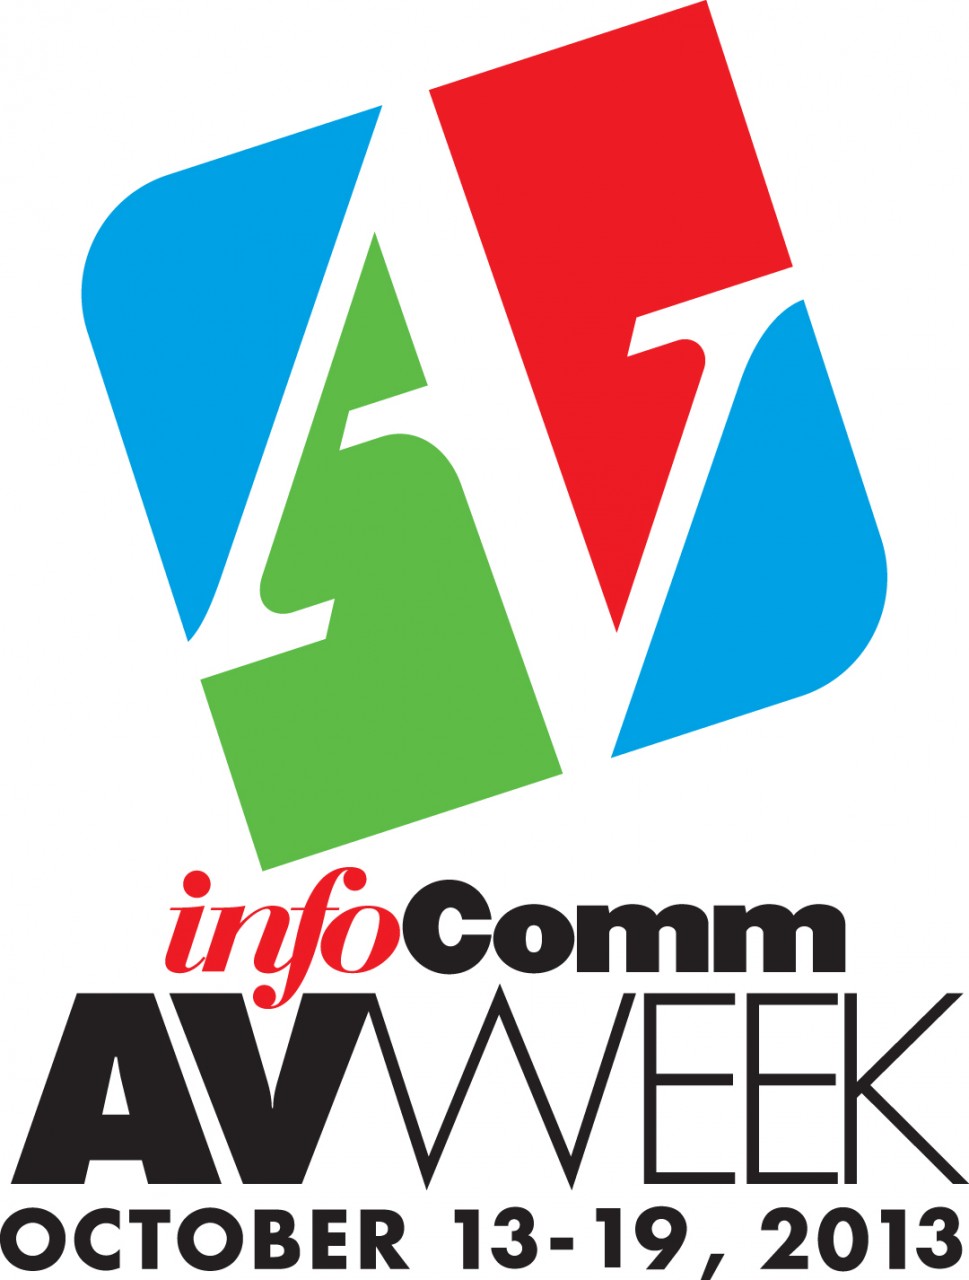 Listen Technologies Announces Utah AV Week Activities